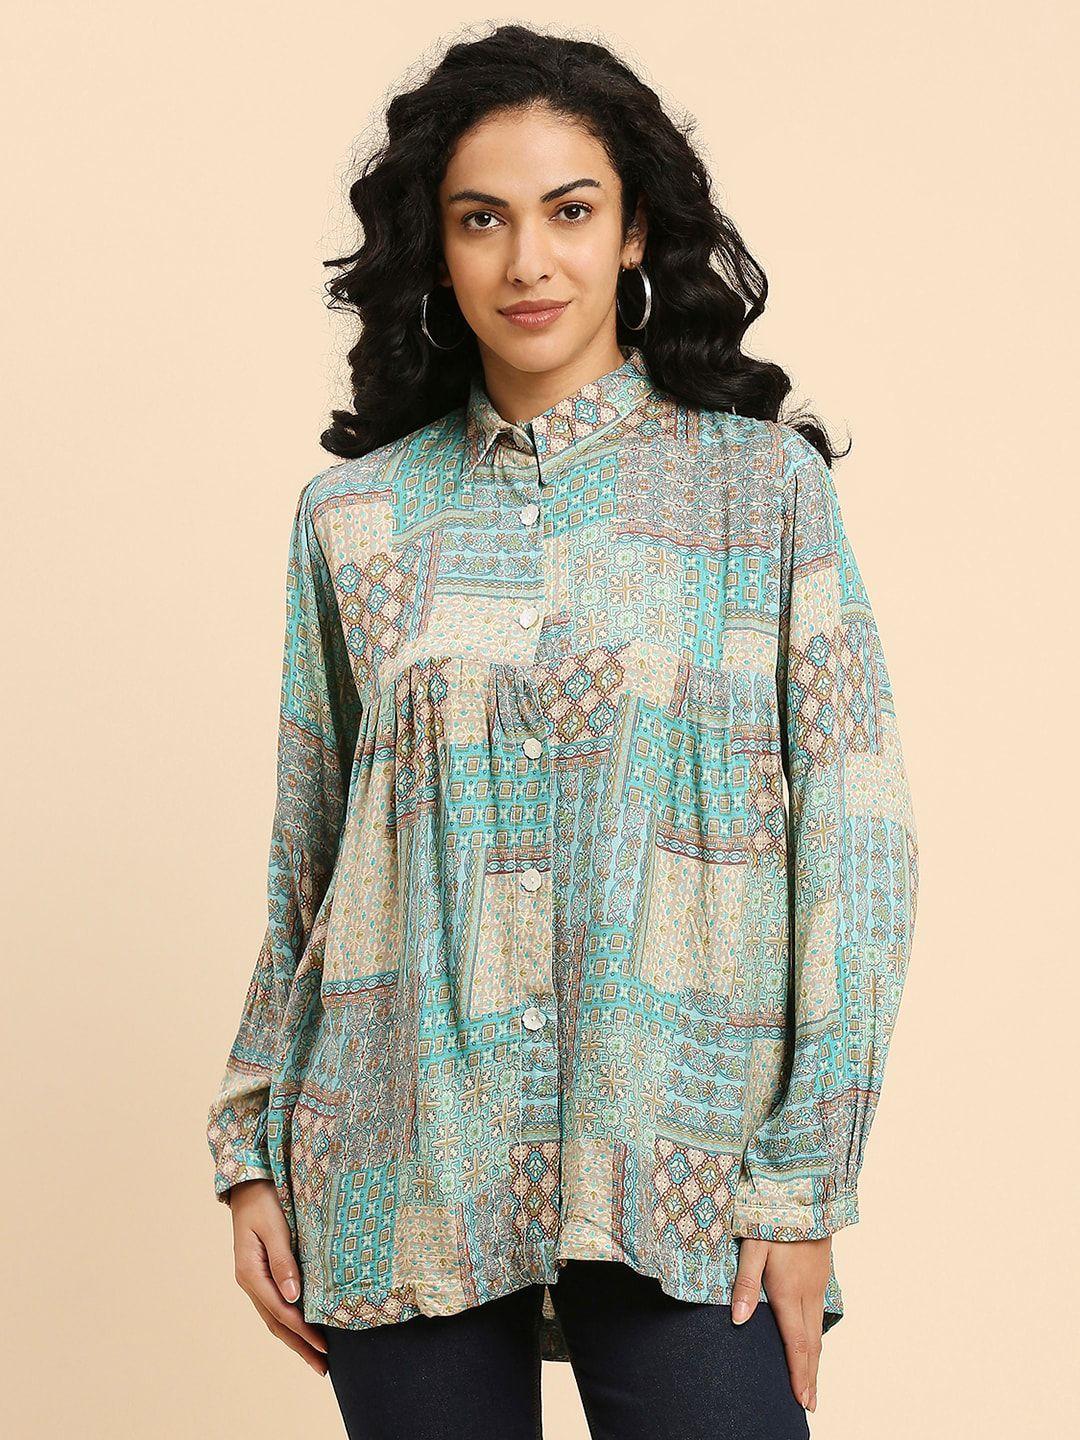 gufrina ethnic motif printed shirt collar gathered & pleated shirt style top